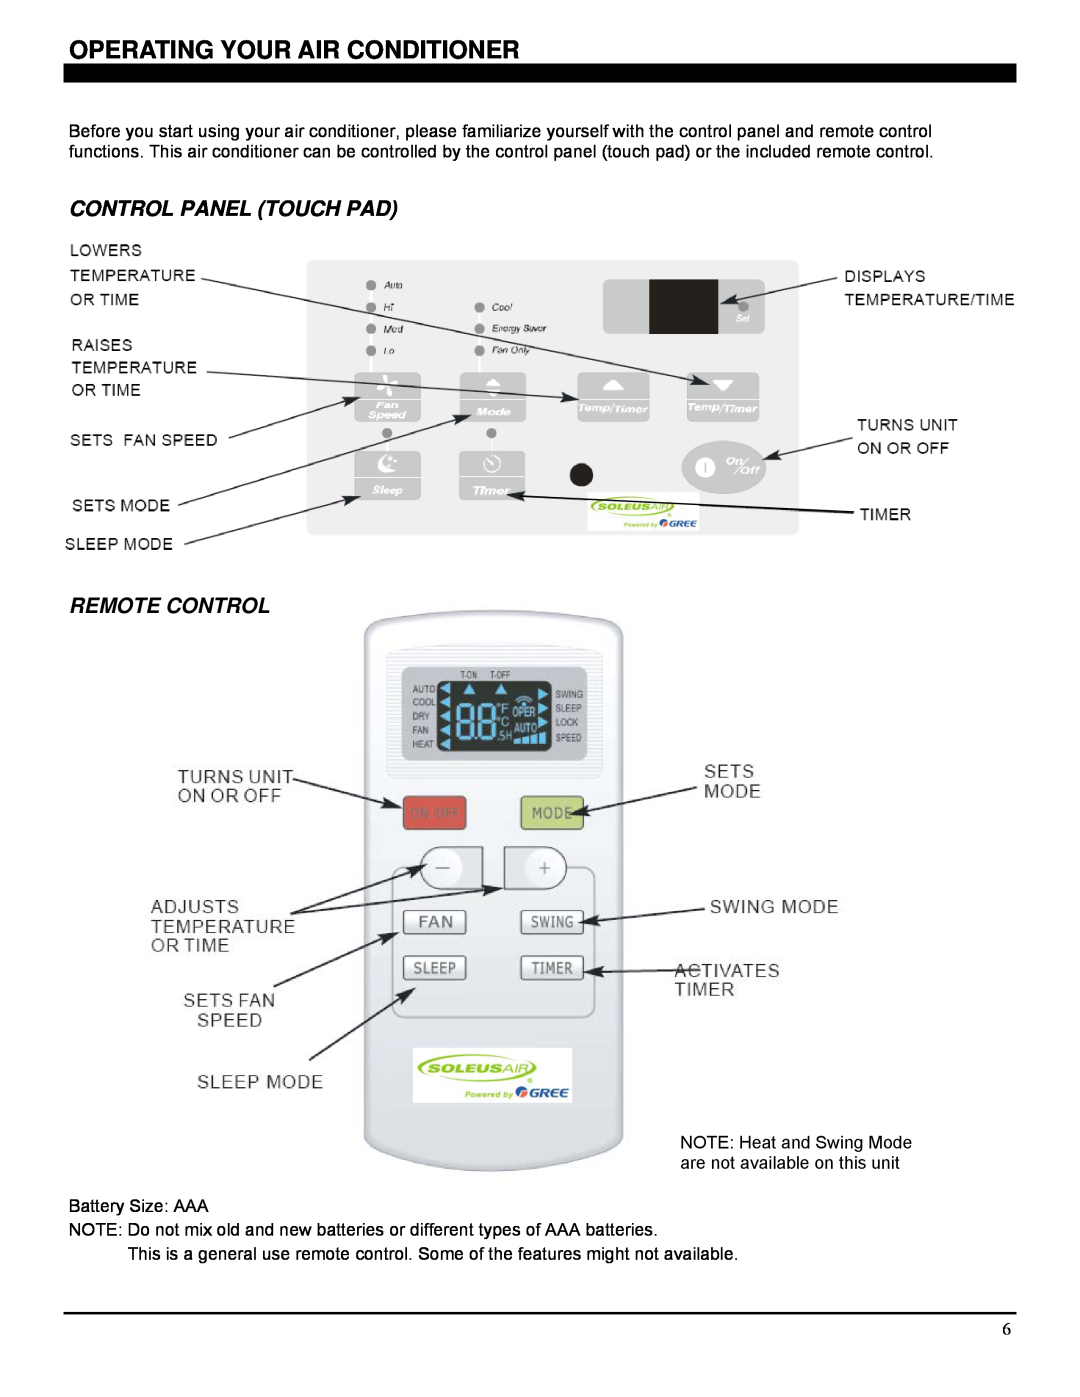 Soleus Air GM-TTW-14, GM-TTW-10ESE, GM-TTW-12ESE Operating Your Air Conditioner, Control Panel Touch Pad Remote Control 